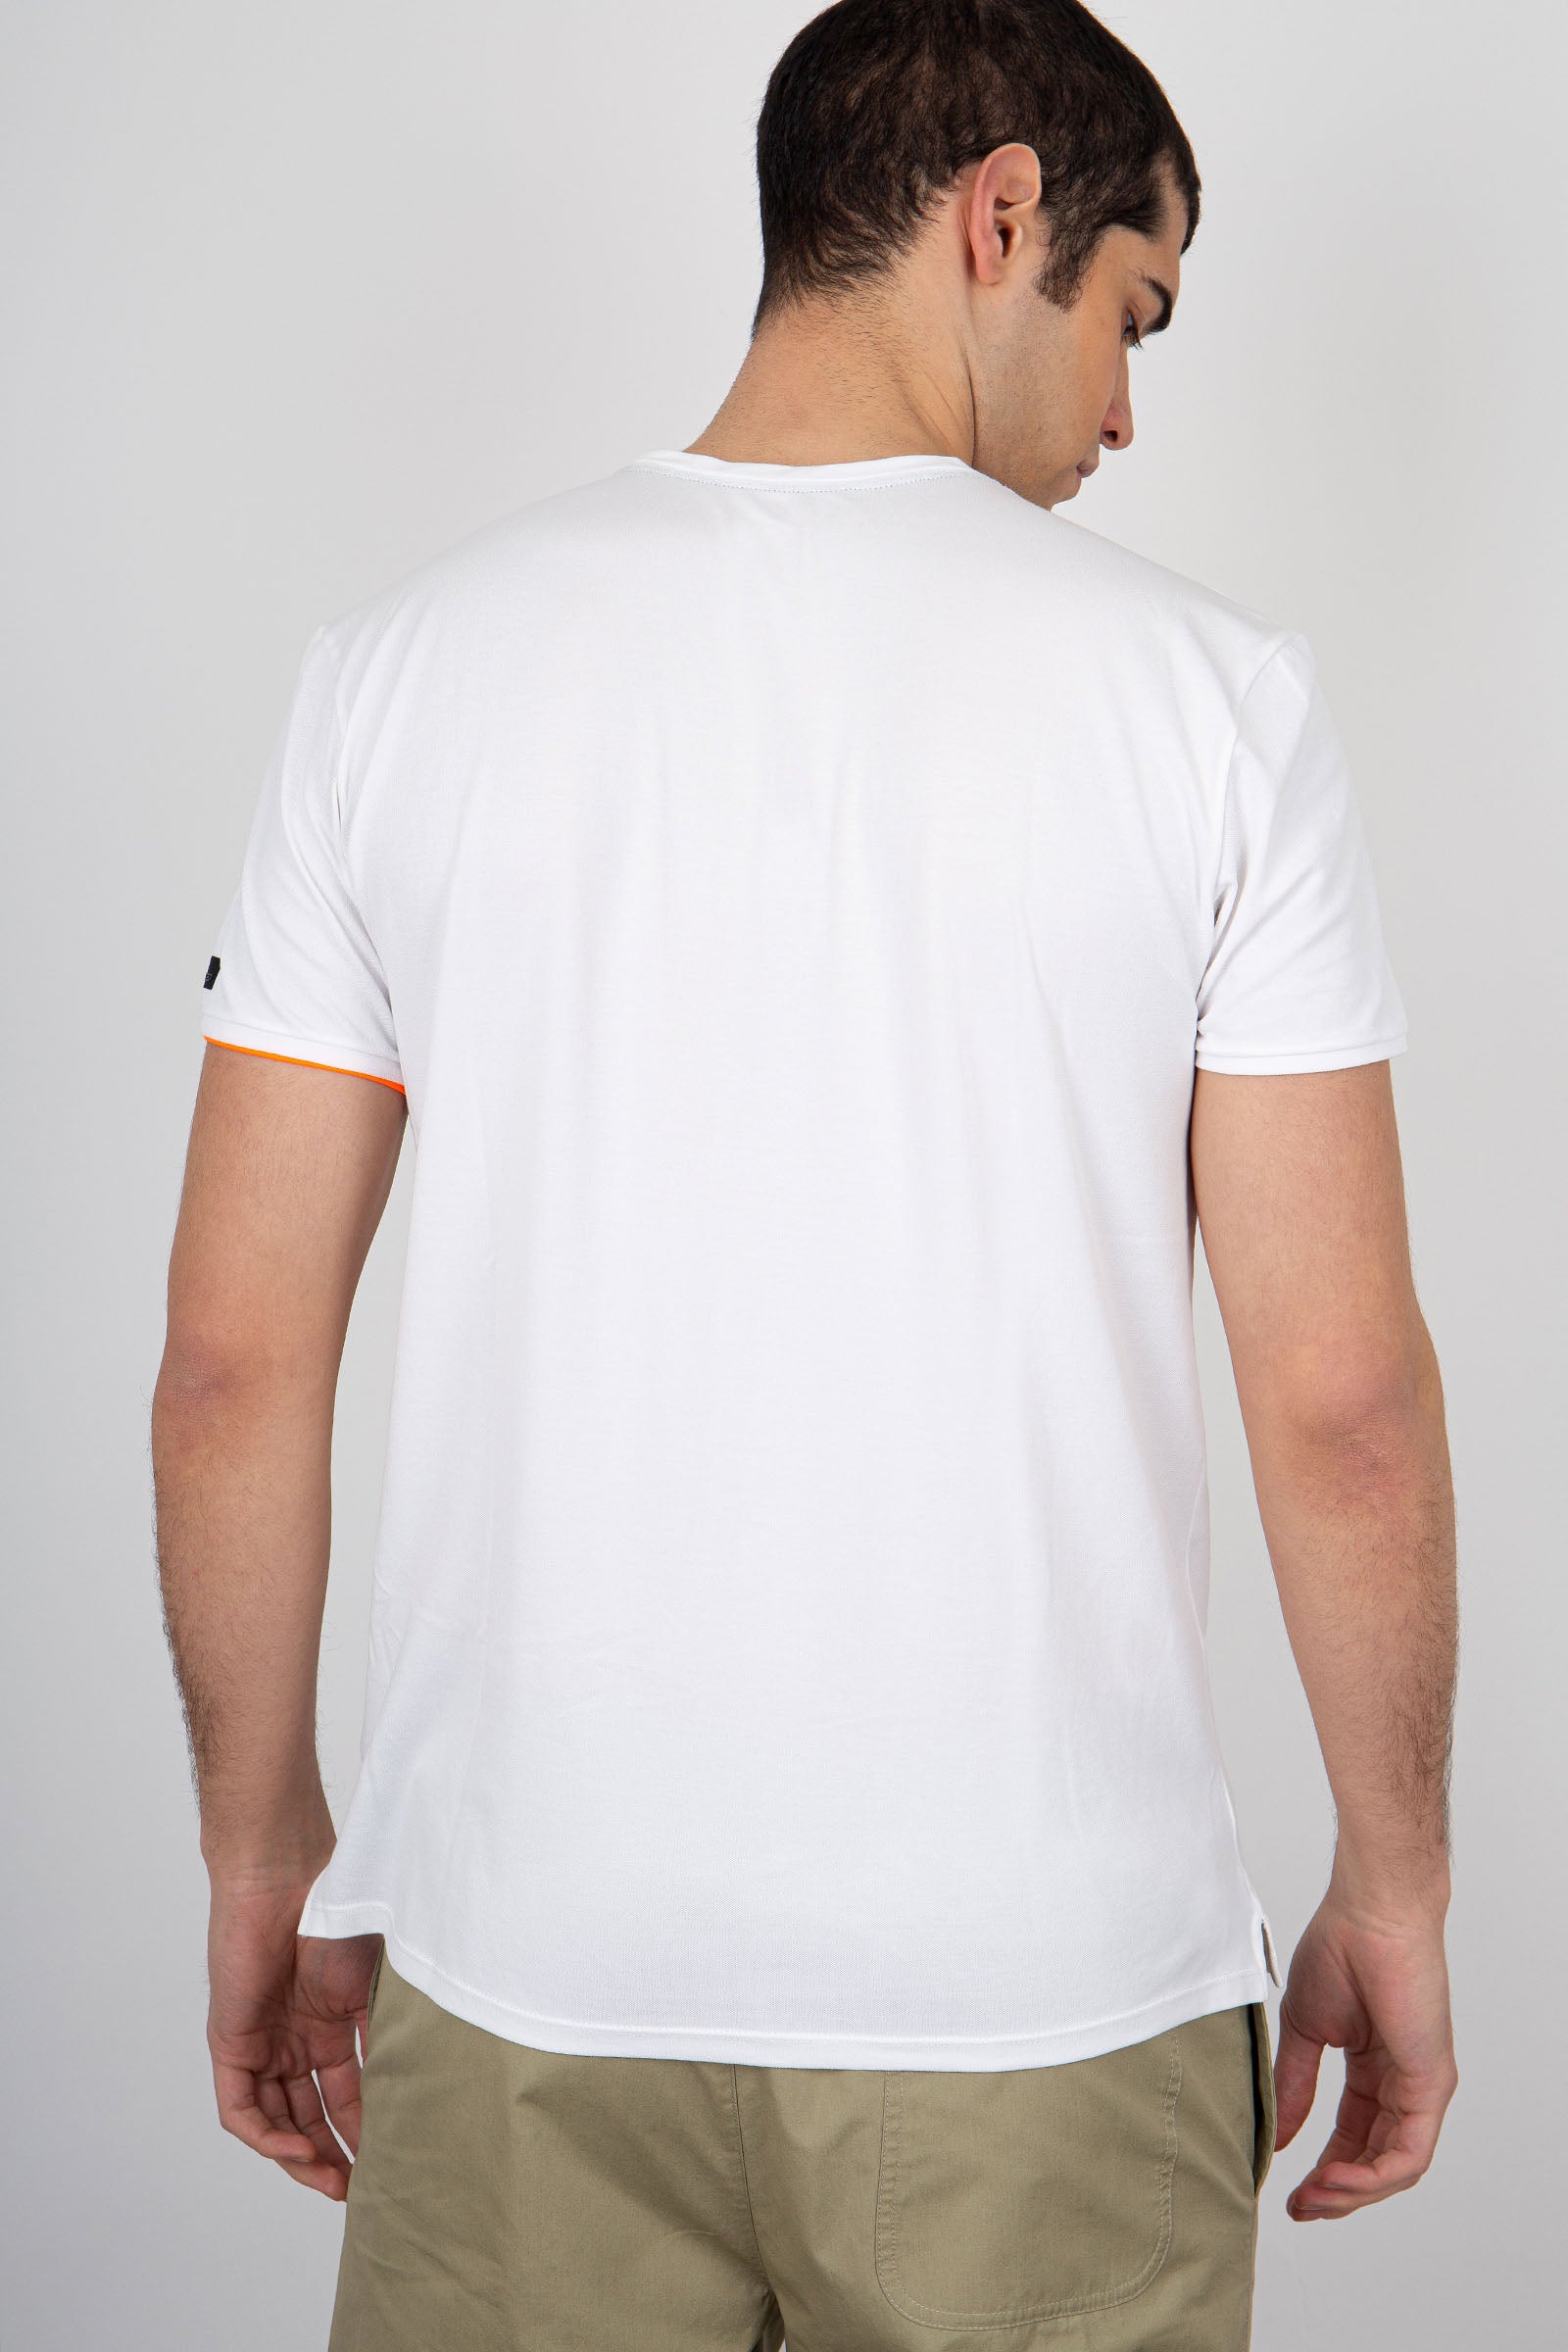 RRD Macro Shirty Synthetic White T-shirt - 4